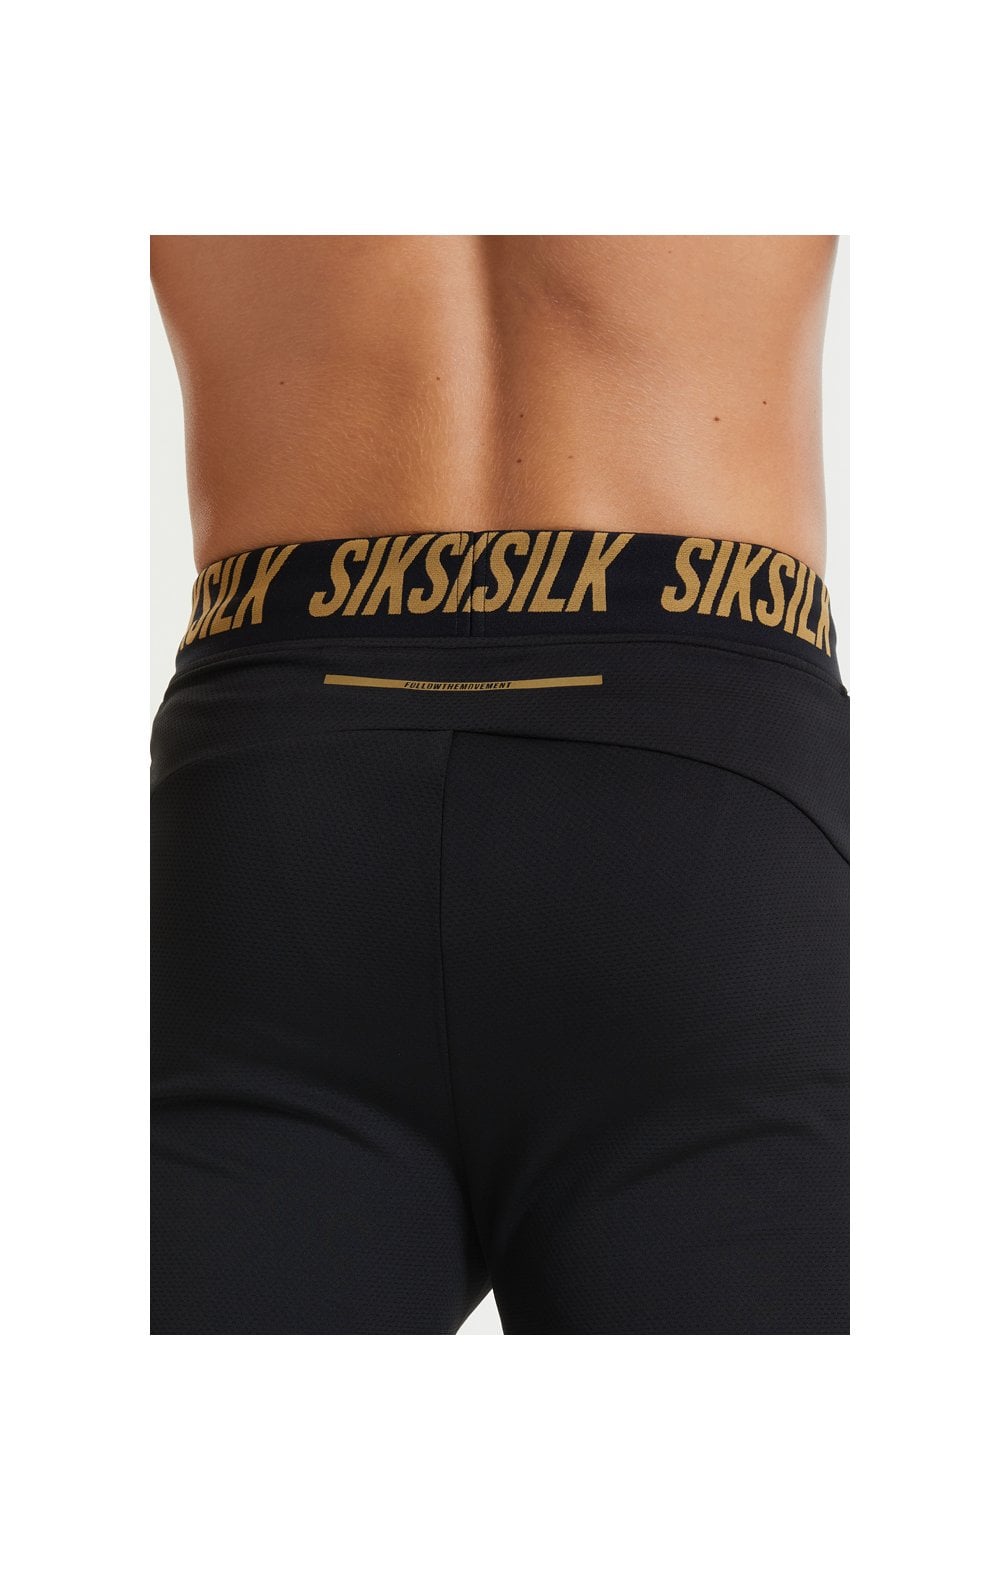 SikSilk Performance Agility Pants - Black & Gold (2)